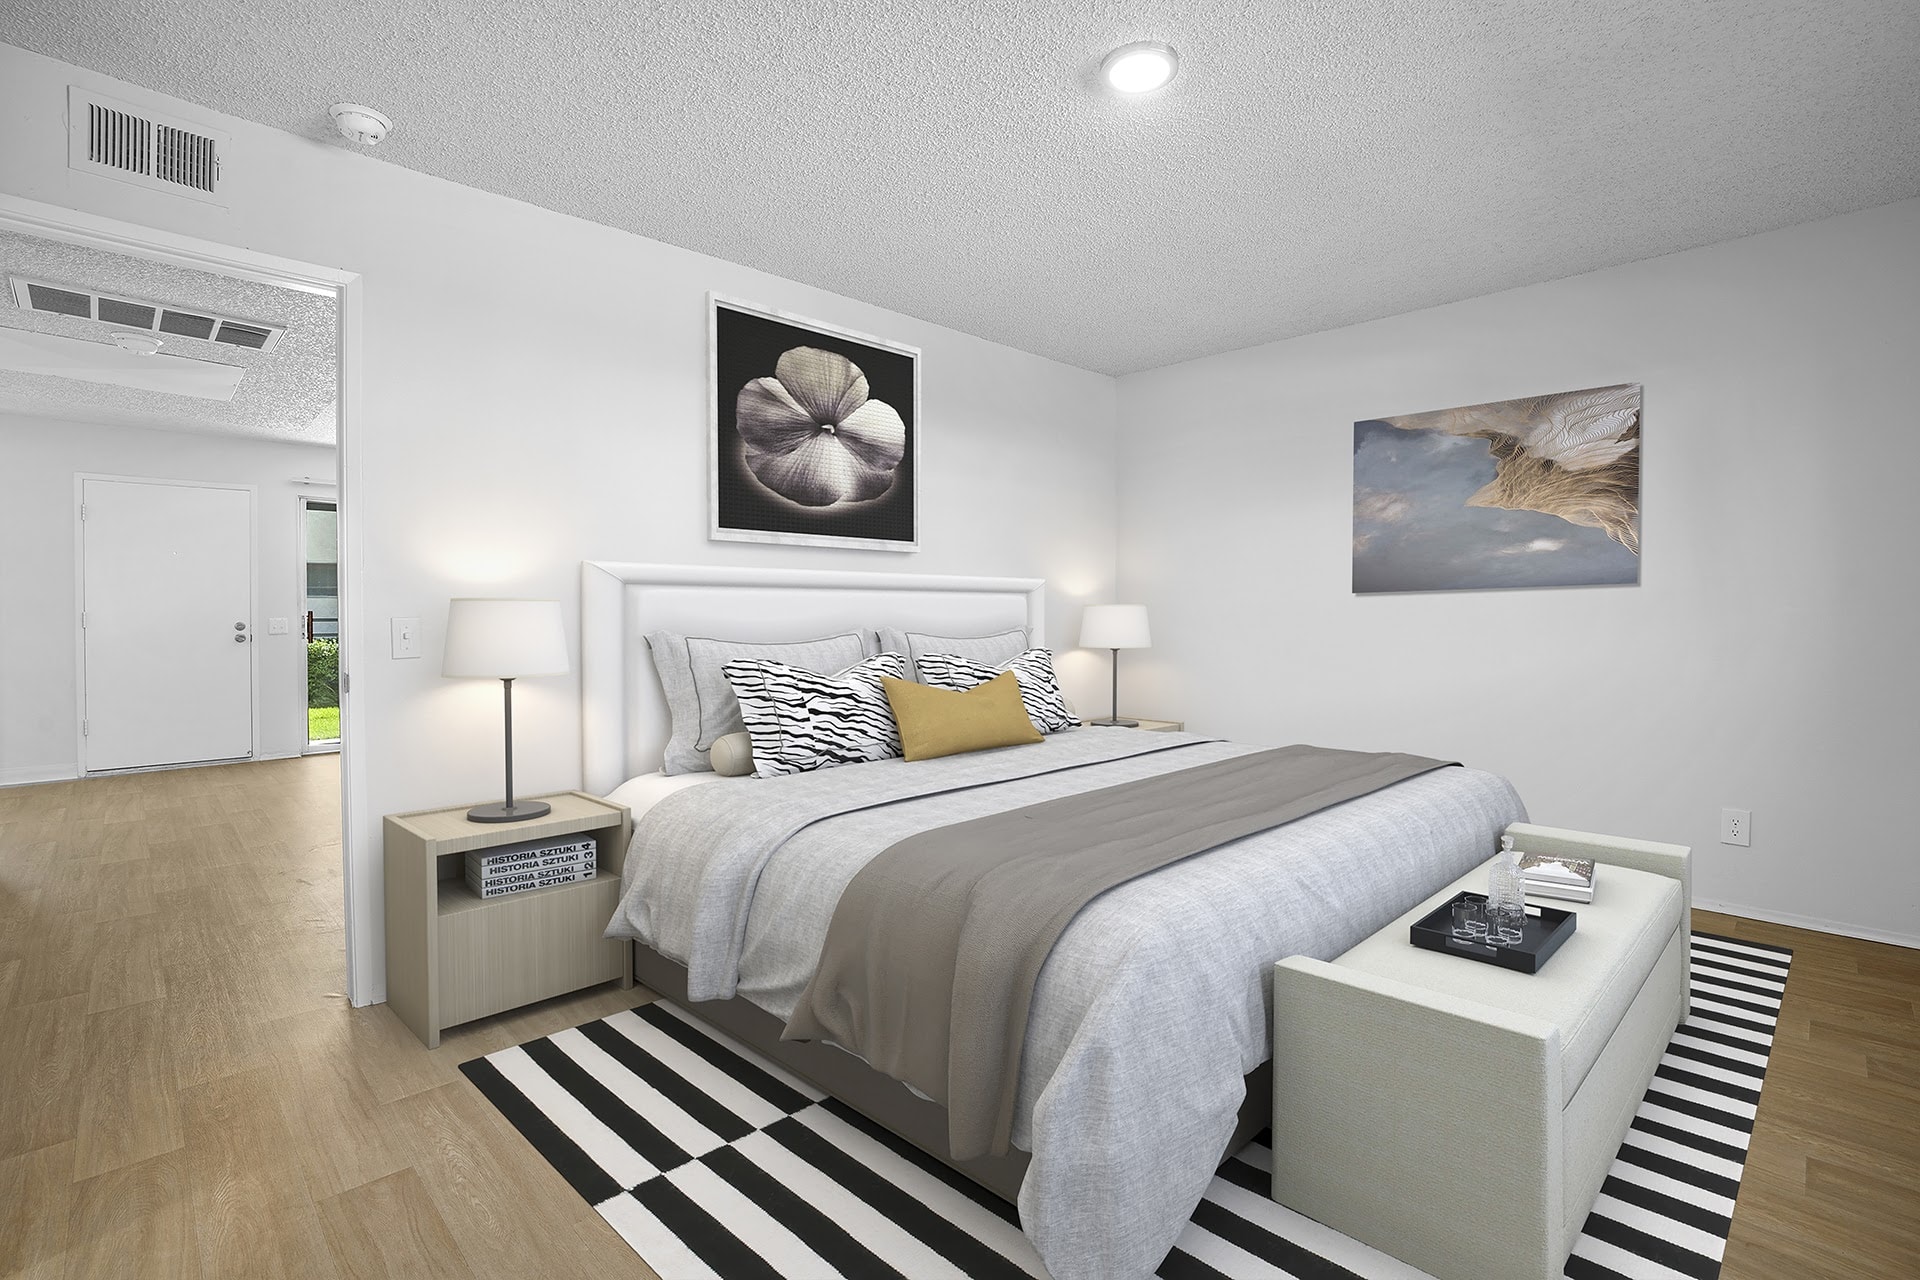 Cedar Glen Apartments - El Cajon (CA 92020), US, one bedroom apartments